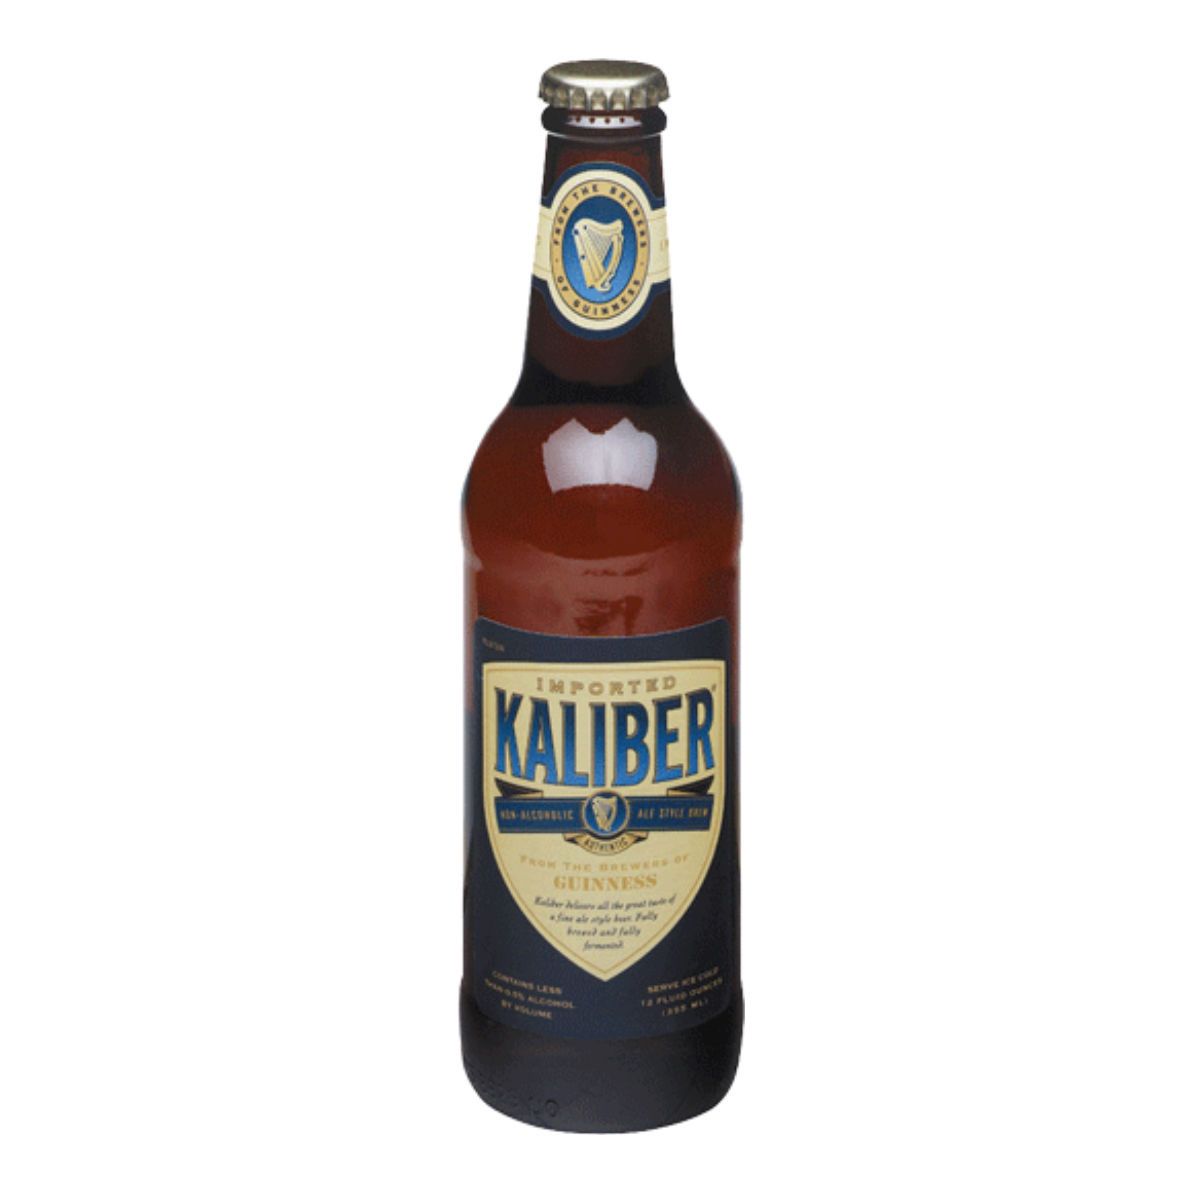 Kaliber-beer